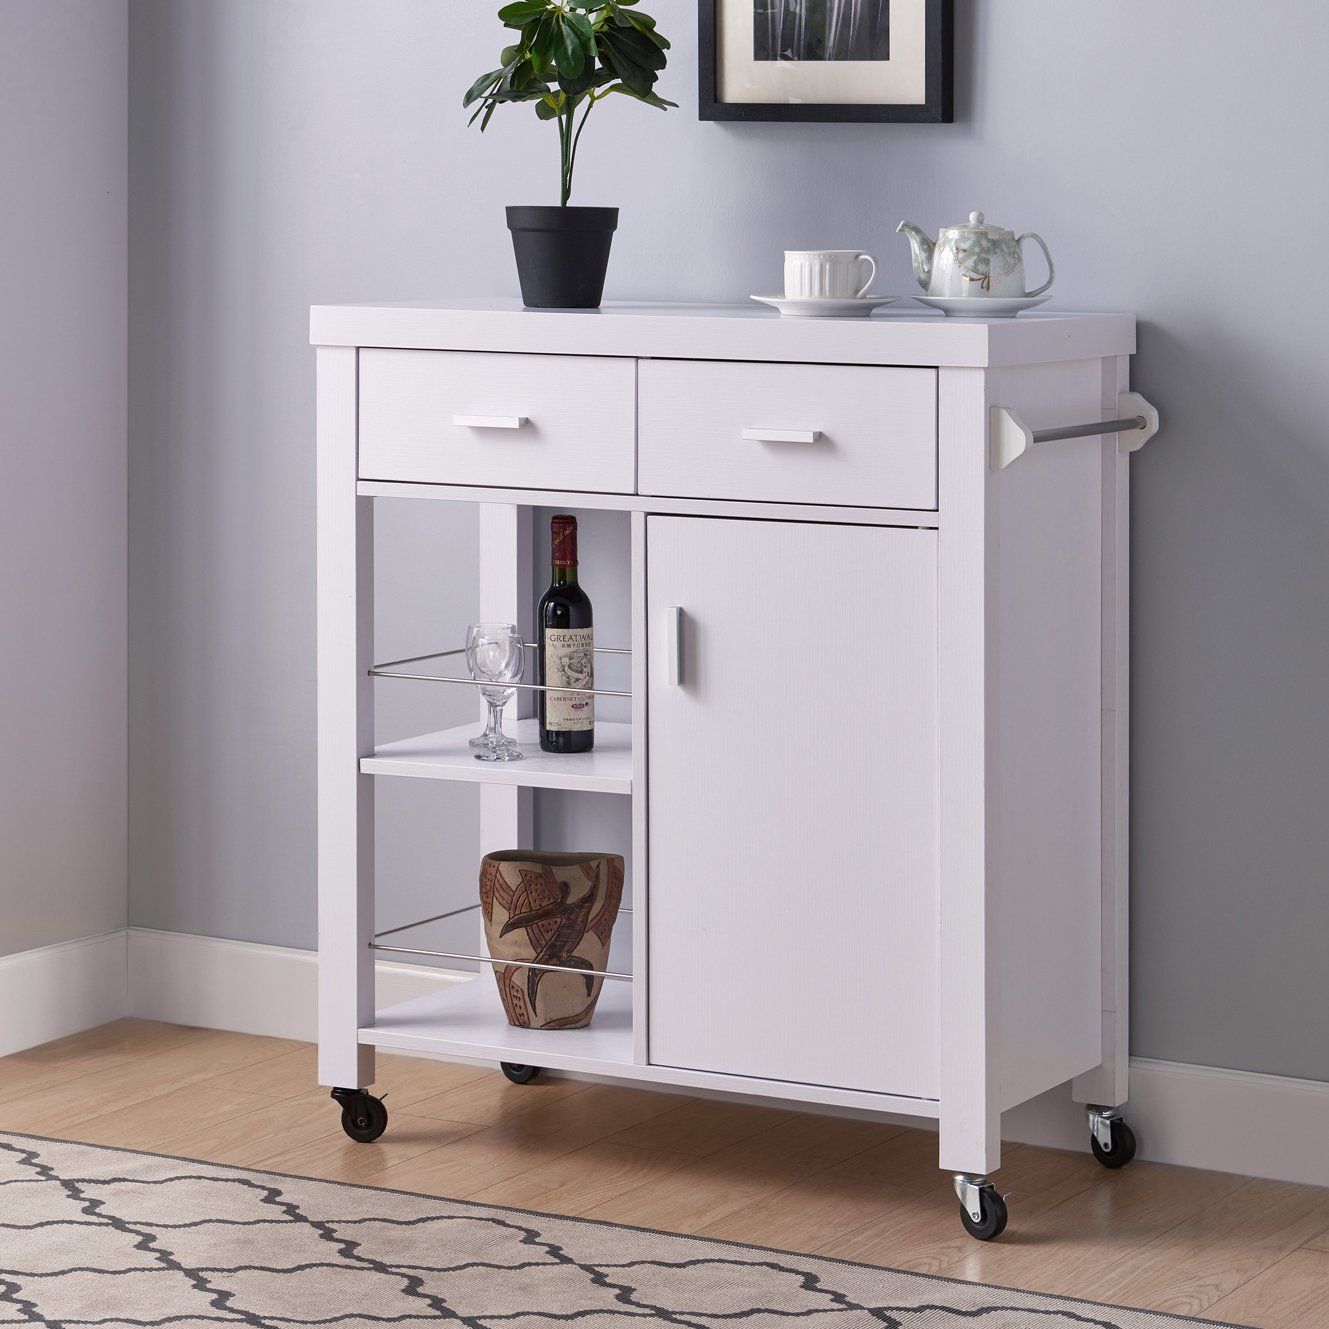 King's Brand White Finish Wood & Marble Finish Top Kitchen Storage Cabinet Cart 